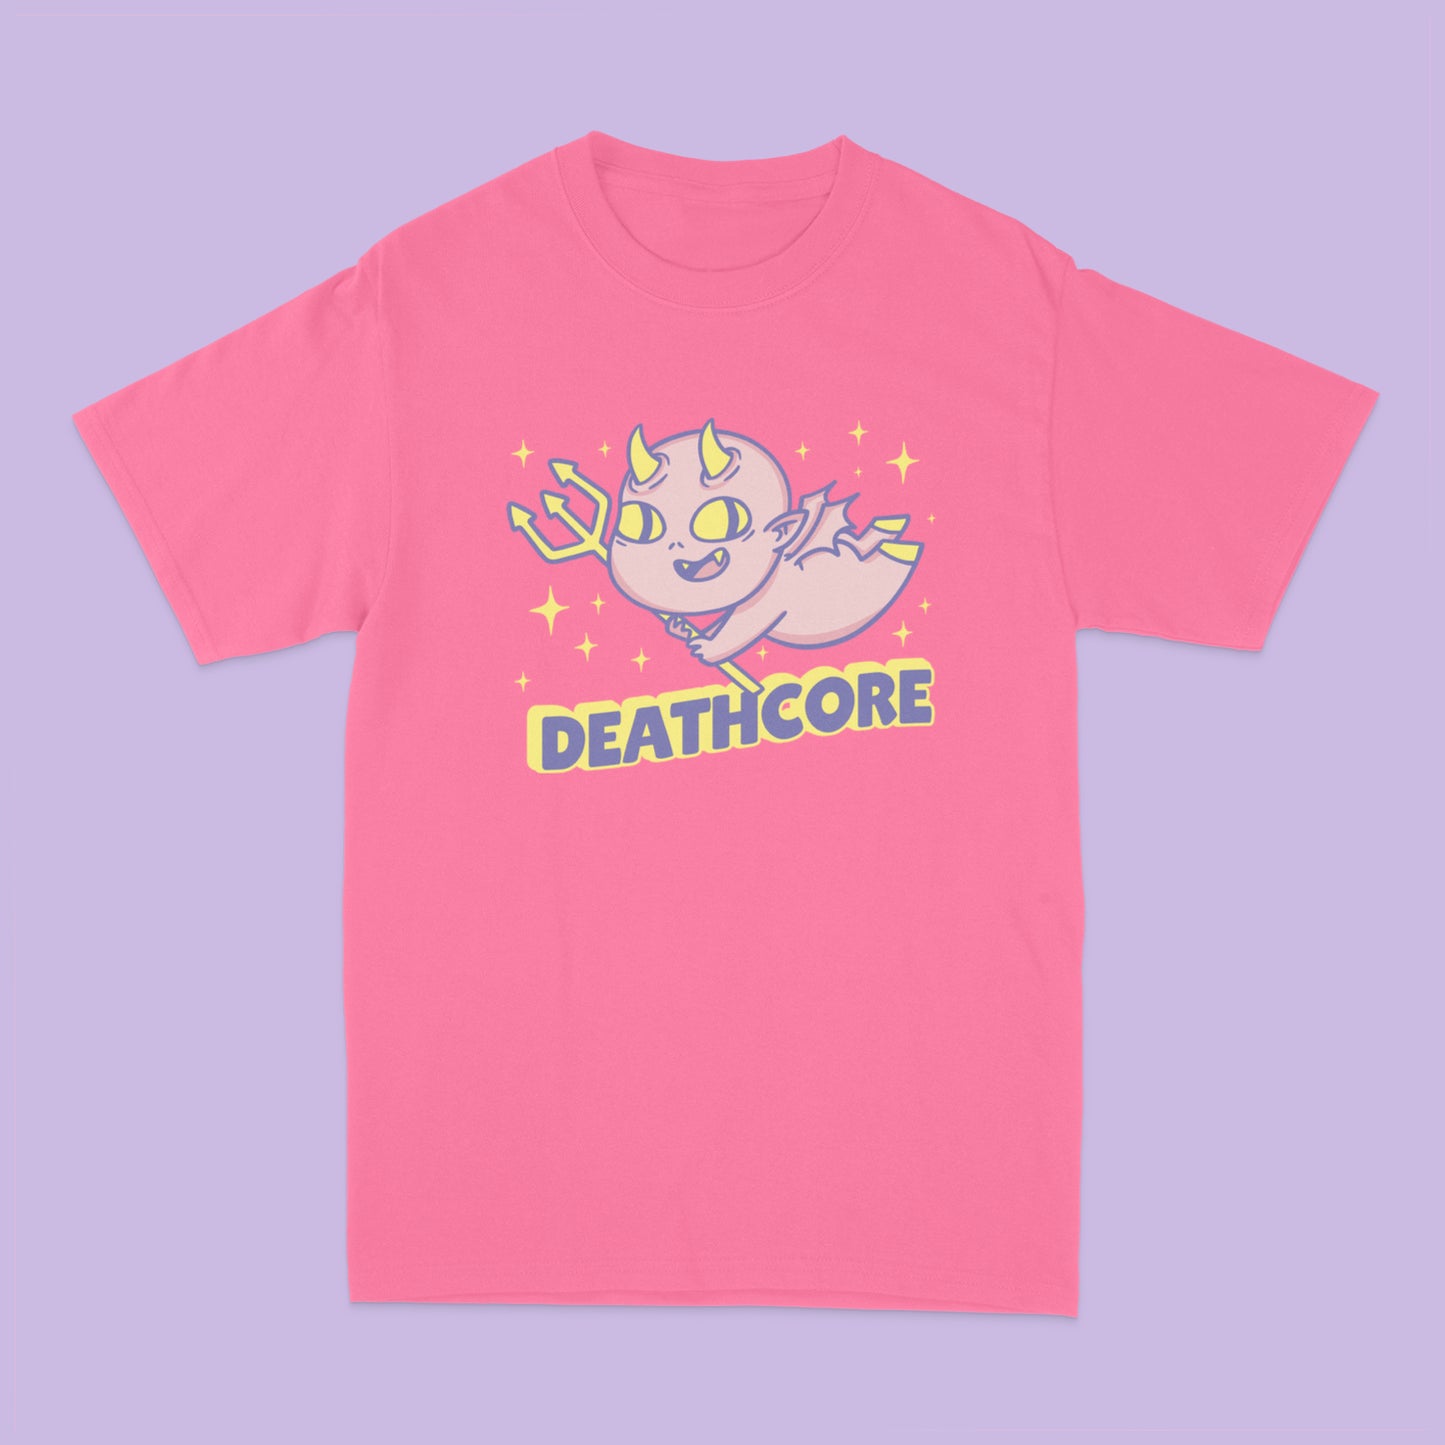 Deathcore Demon T-Shirt